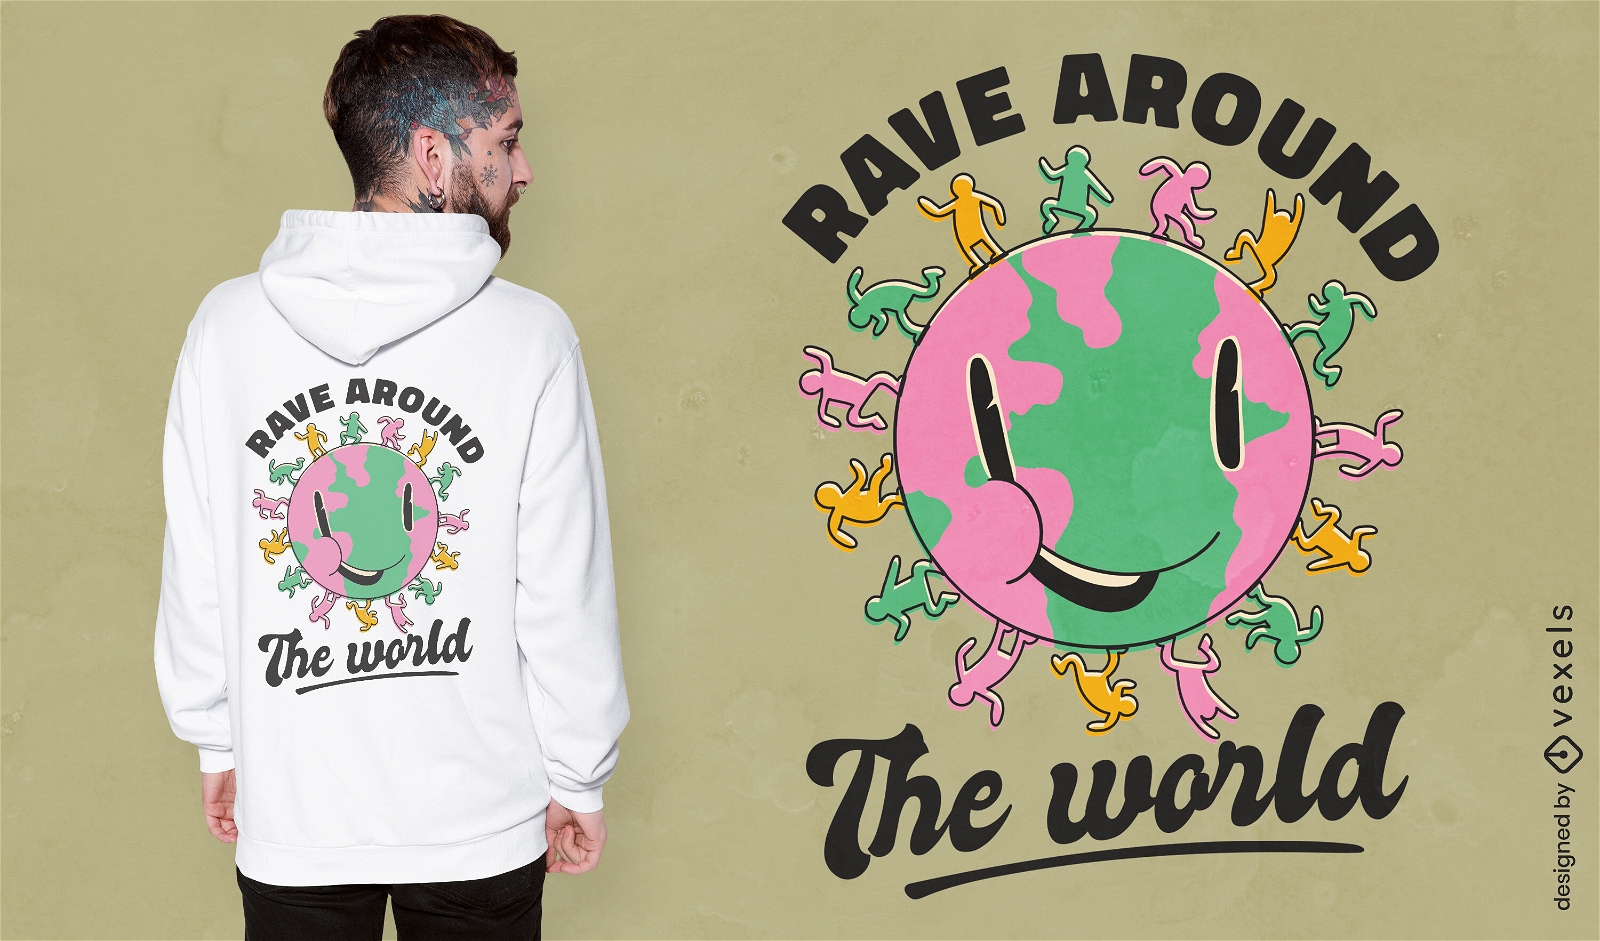 Rave around the world t-shirt design